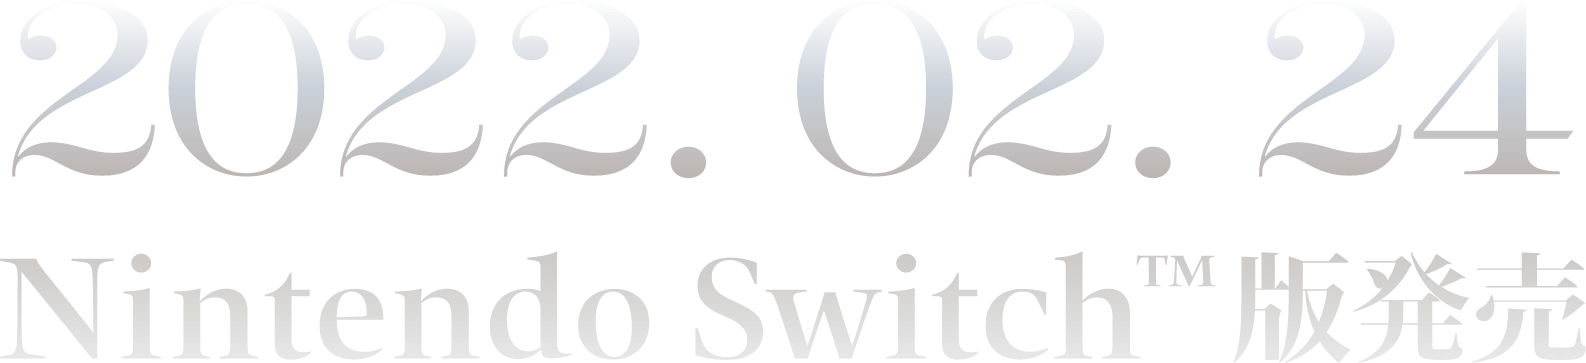 2022.02.24 Nintendo Switch™版発売